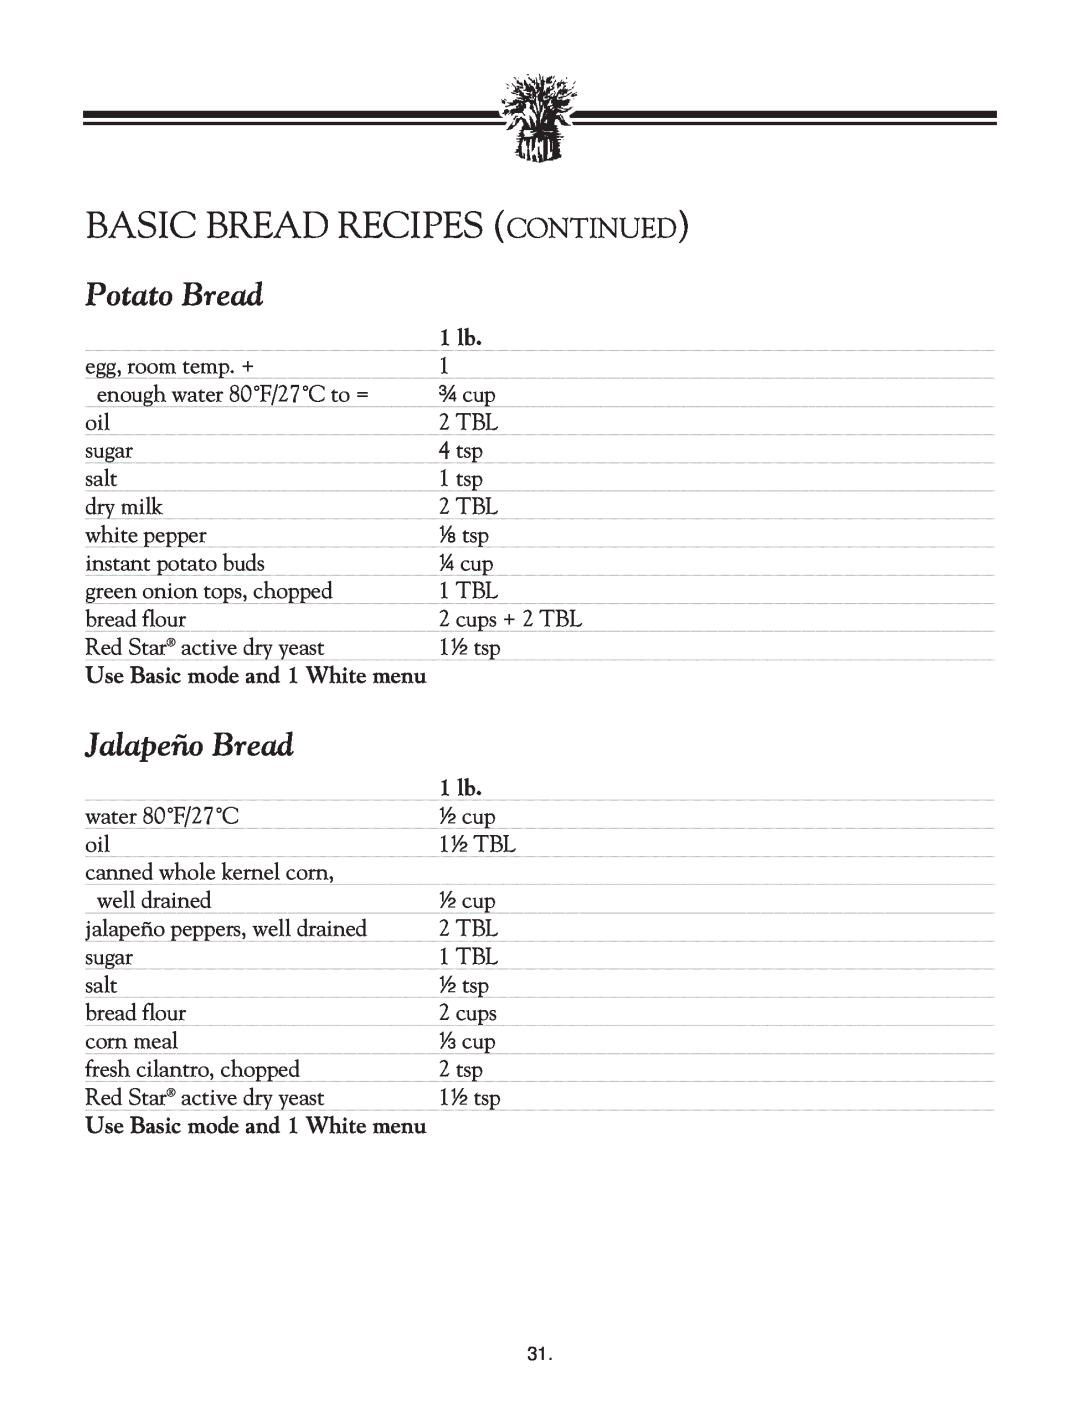 Breadman TR2828G instruction manual Potato Bread, Jalapeño Bread, Basic Bread Recipes Continued 